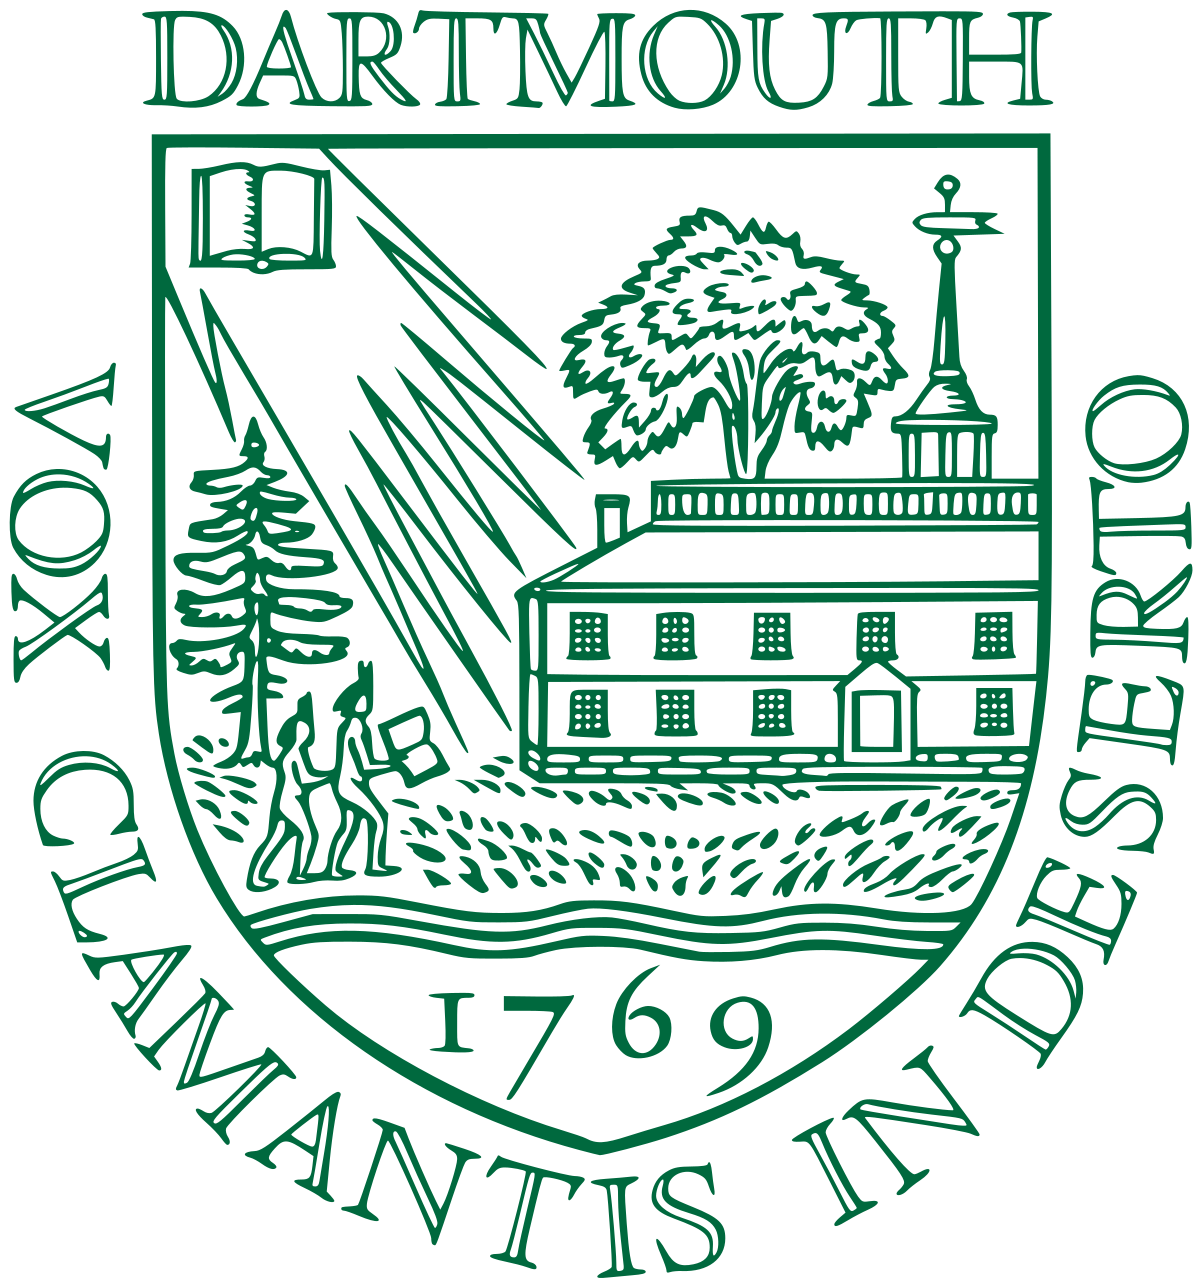 Dartmouth's Formula Hybrid Wins Coveted Award